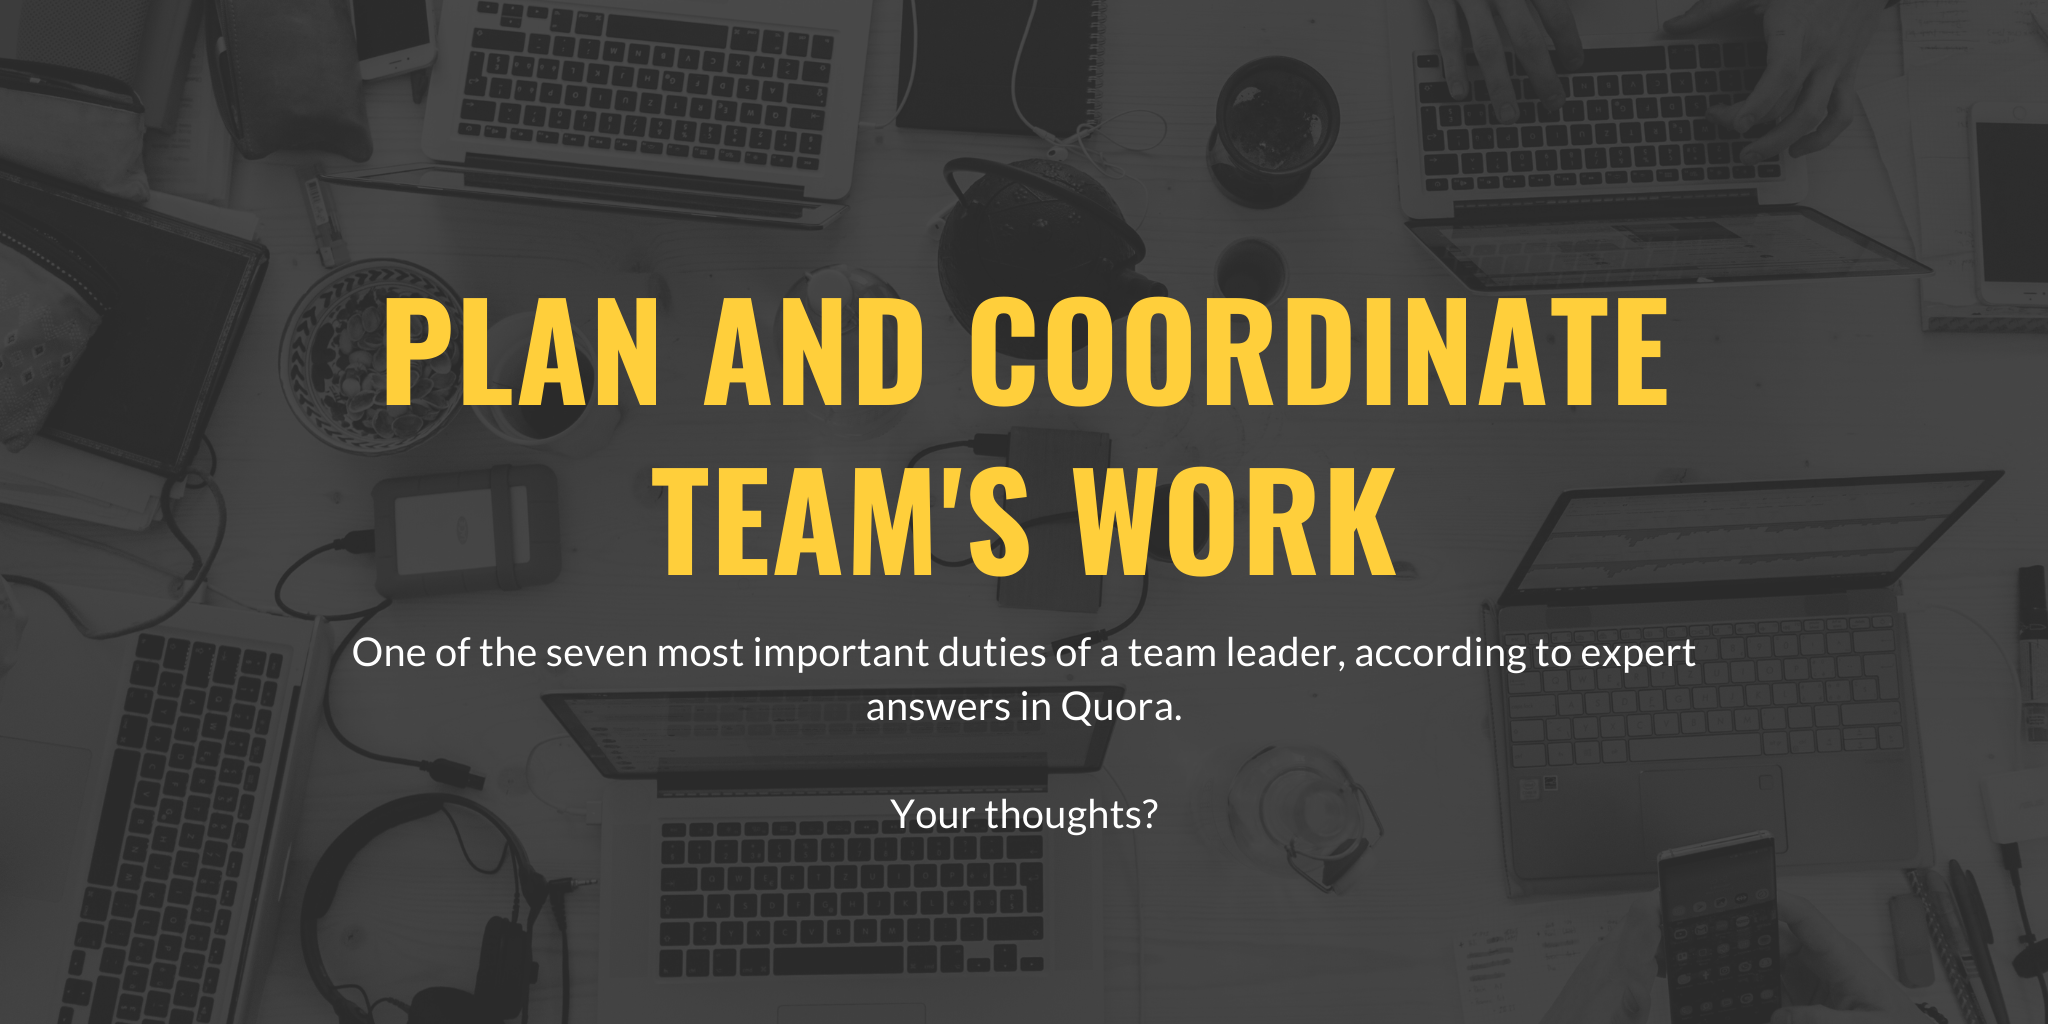 Team Leadership: Planning and Coordinating Team's Work